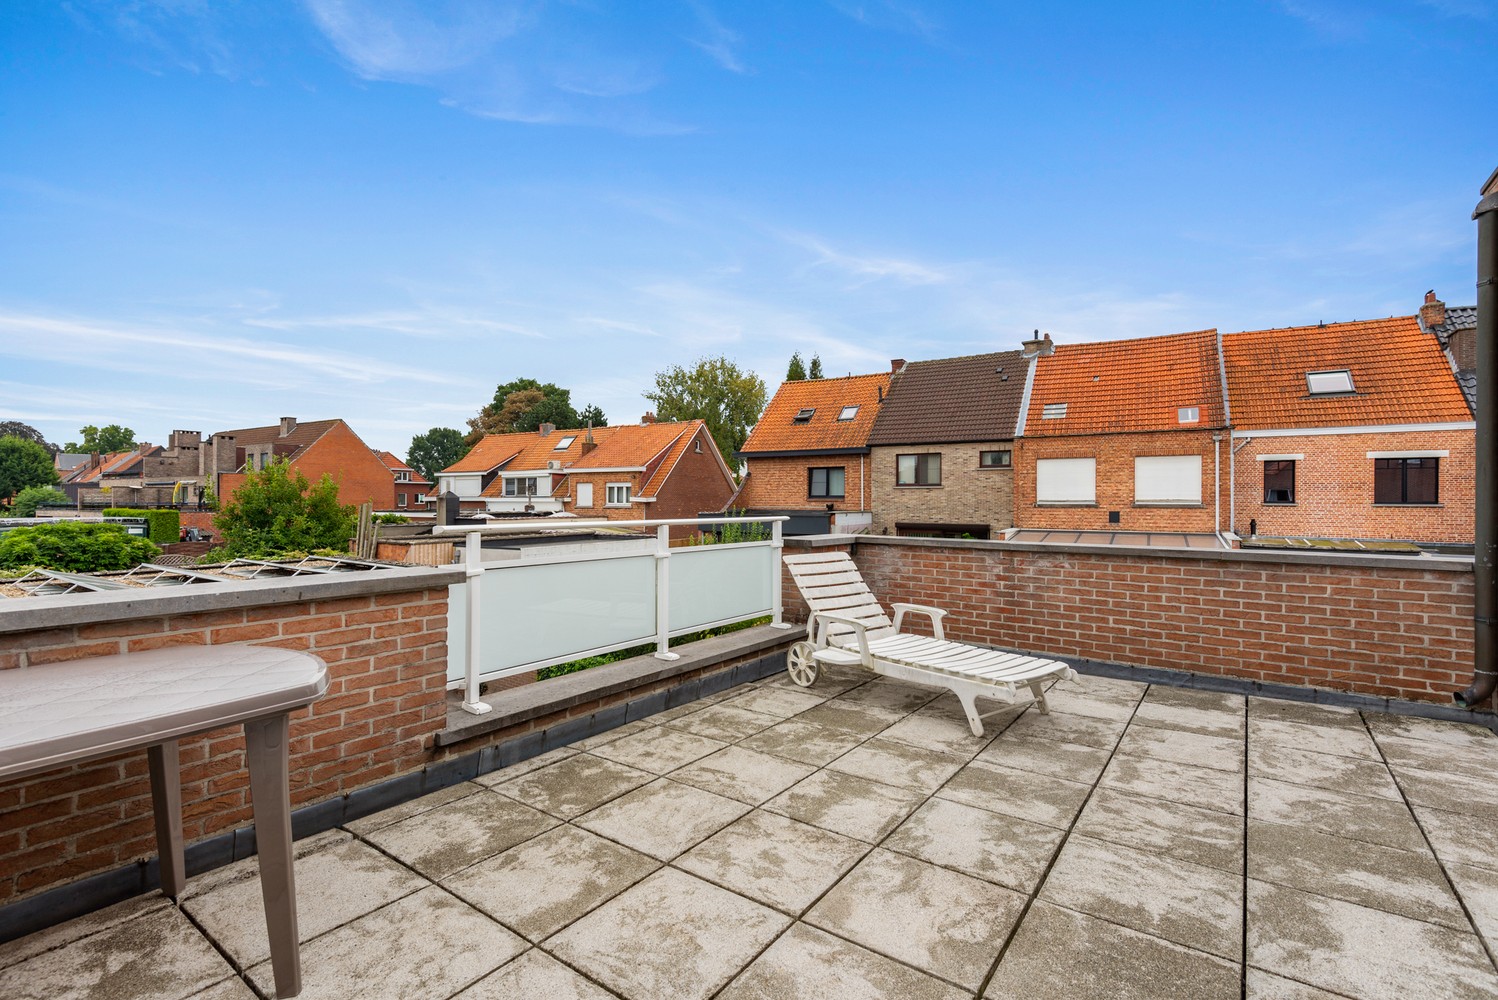 Leuke duplex met 2 slaapkamers, terras & garagebox in hartje Wommelgem! afbeelding 11